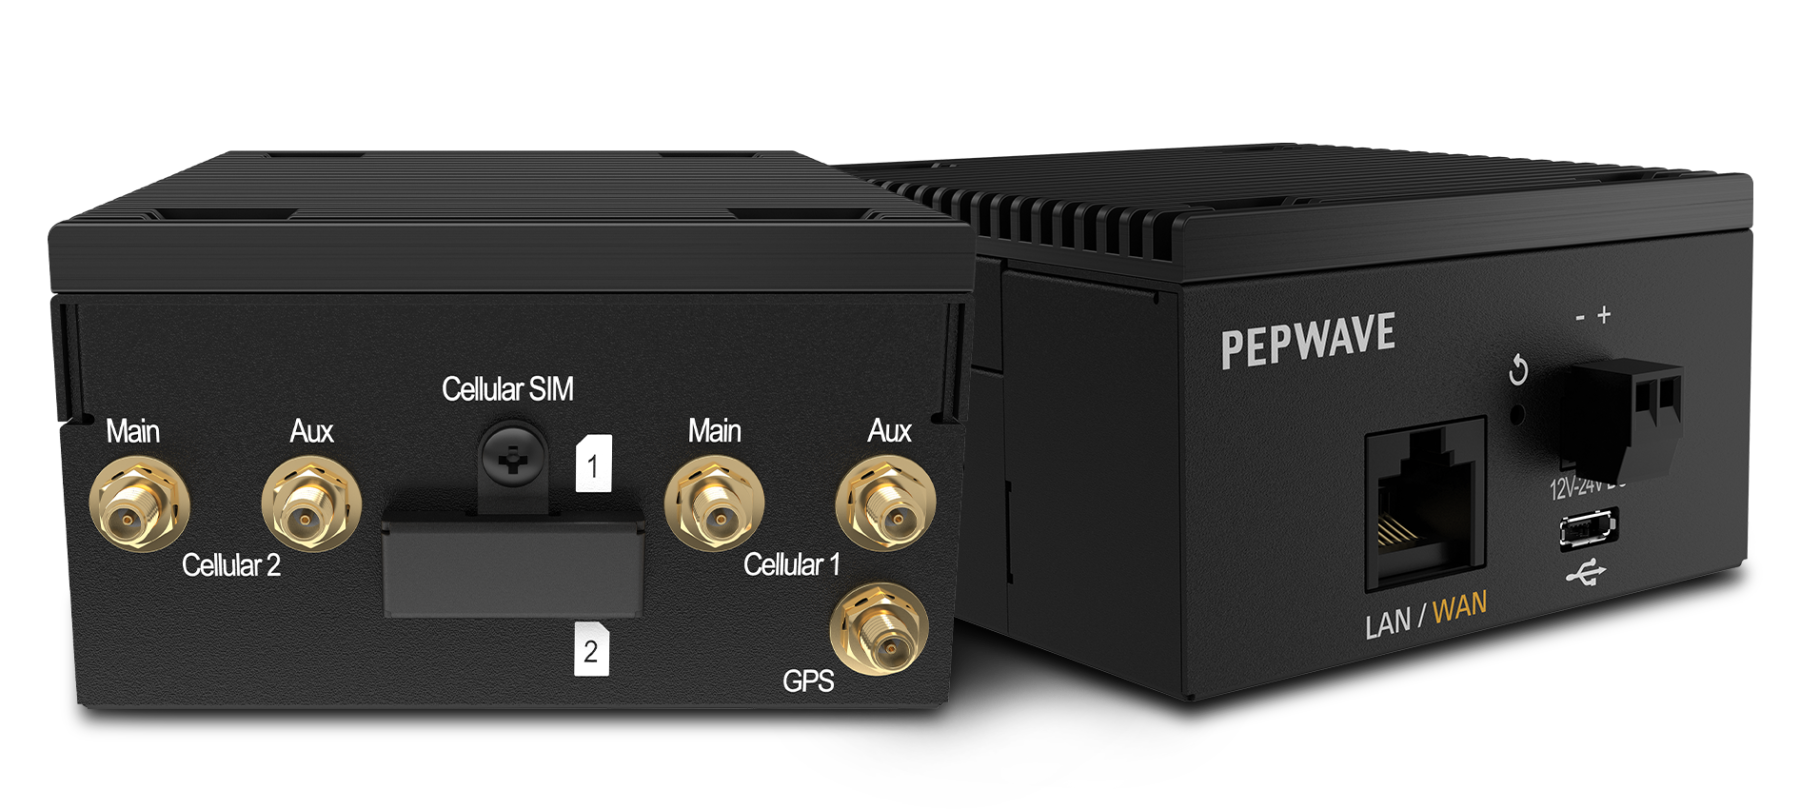 Pepwave SpeedFusion Engine